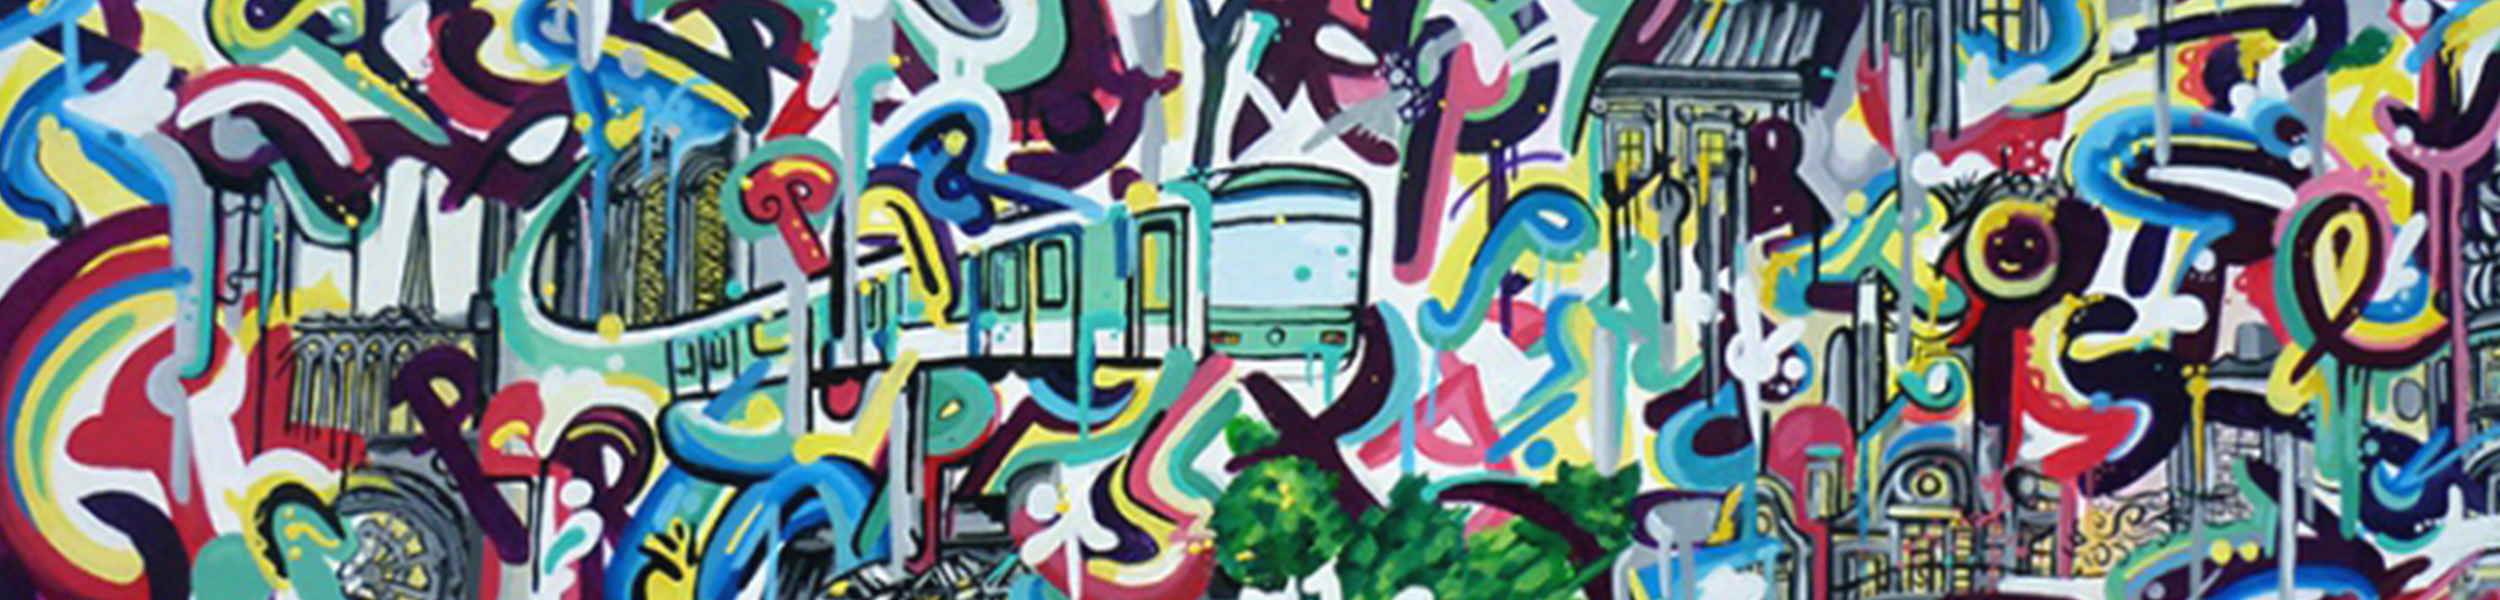 Anis Graffiti